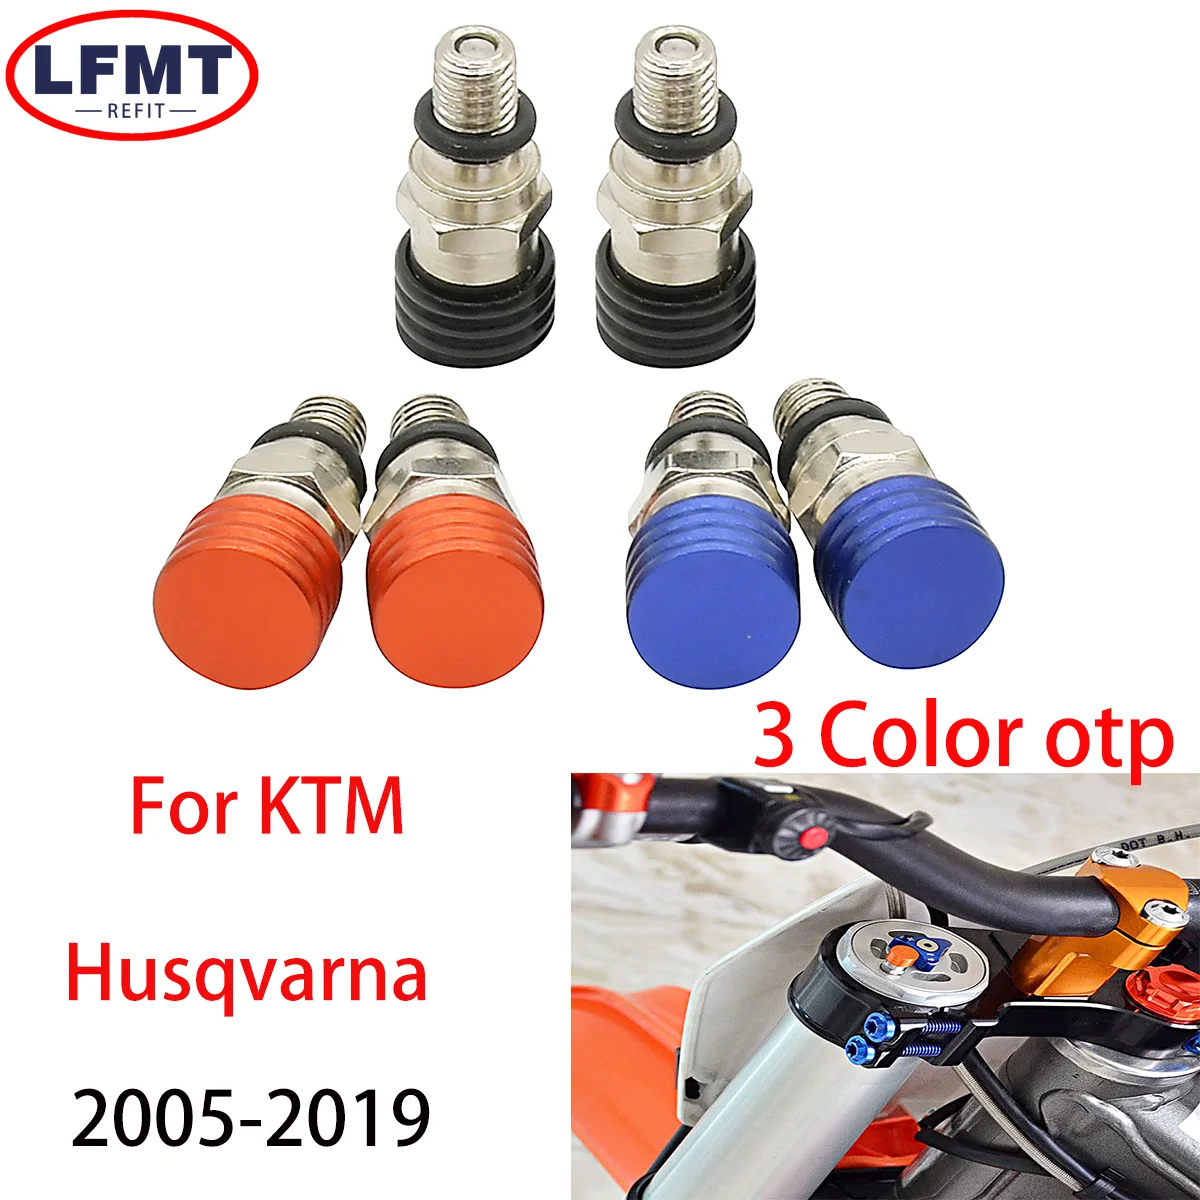 

Motocross M4x0.7 Air release screw For KTM SX SXF EXC EXCF XC XCW For Husqvarna TC FC TE FE 85 125 250 350 300 450 501 2005-2019